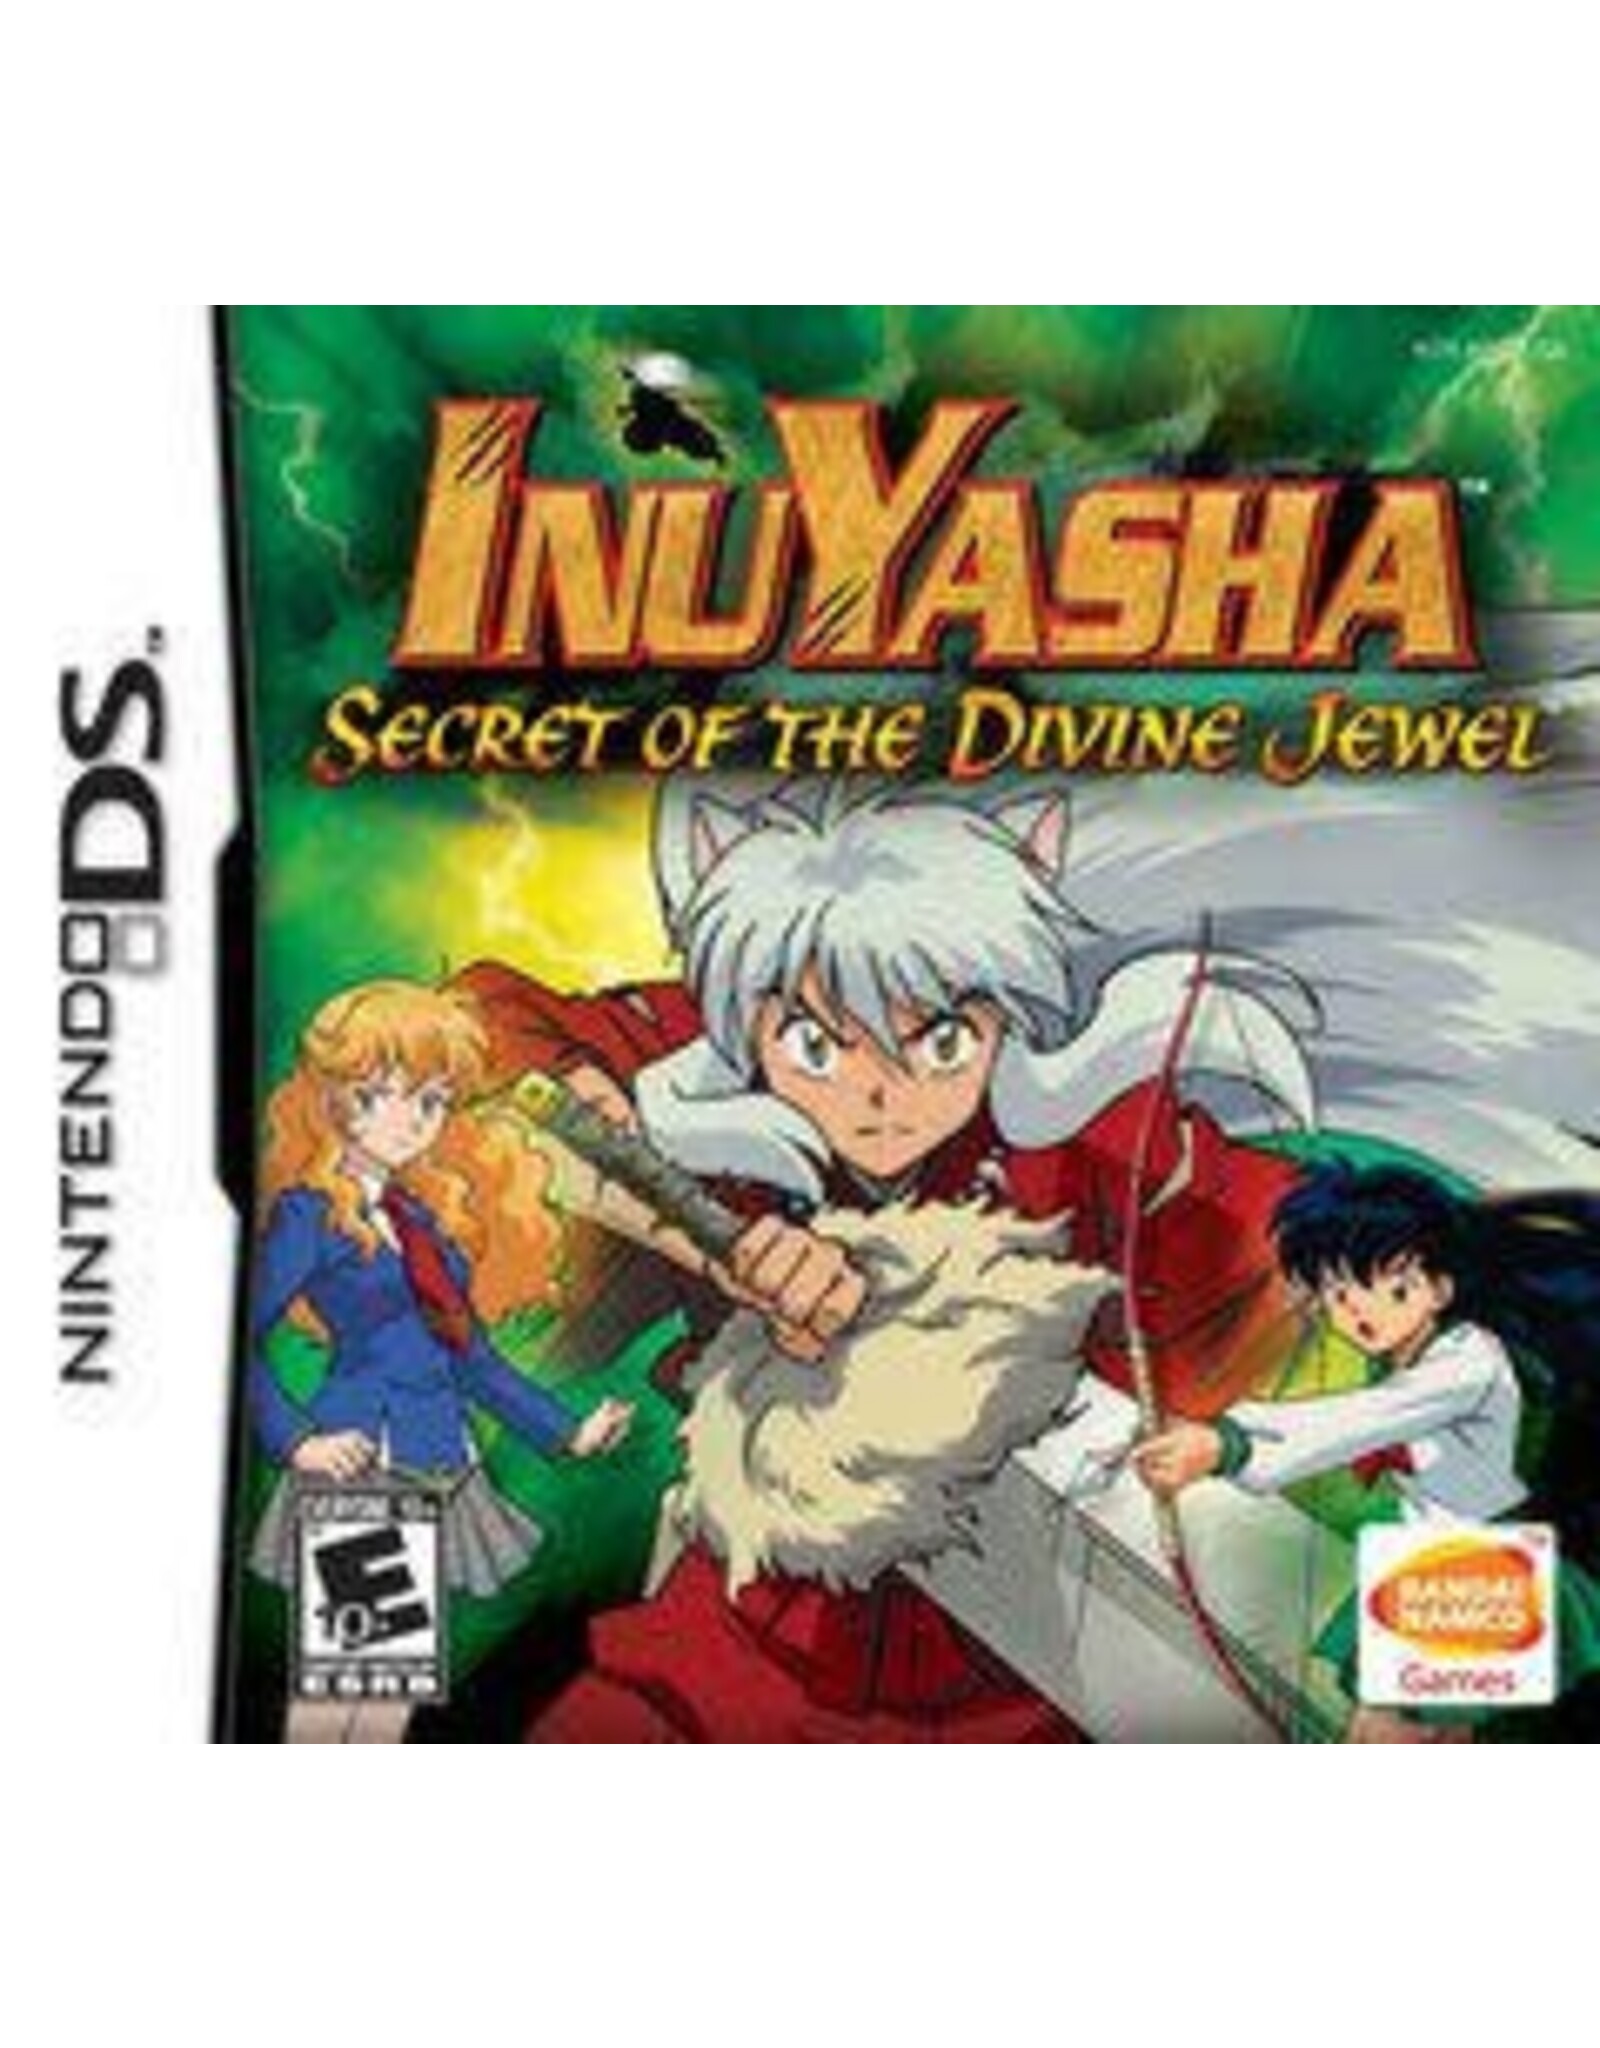 Nintendo DS Inuyasha Secret of the Divine Jewel (Used)